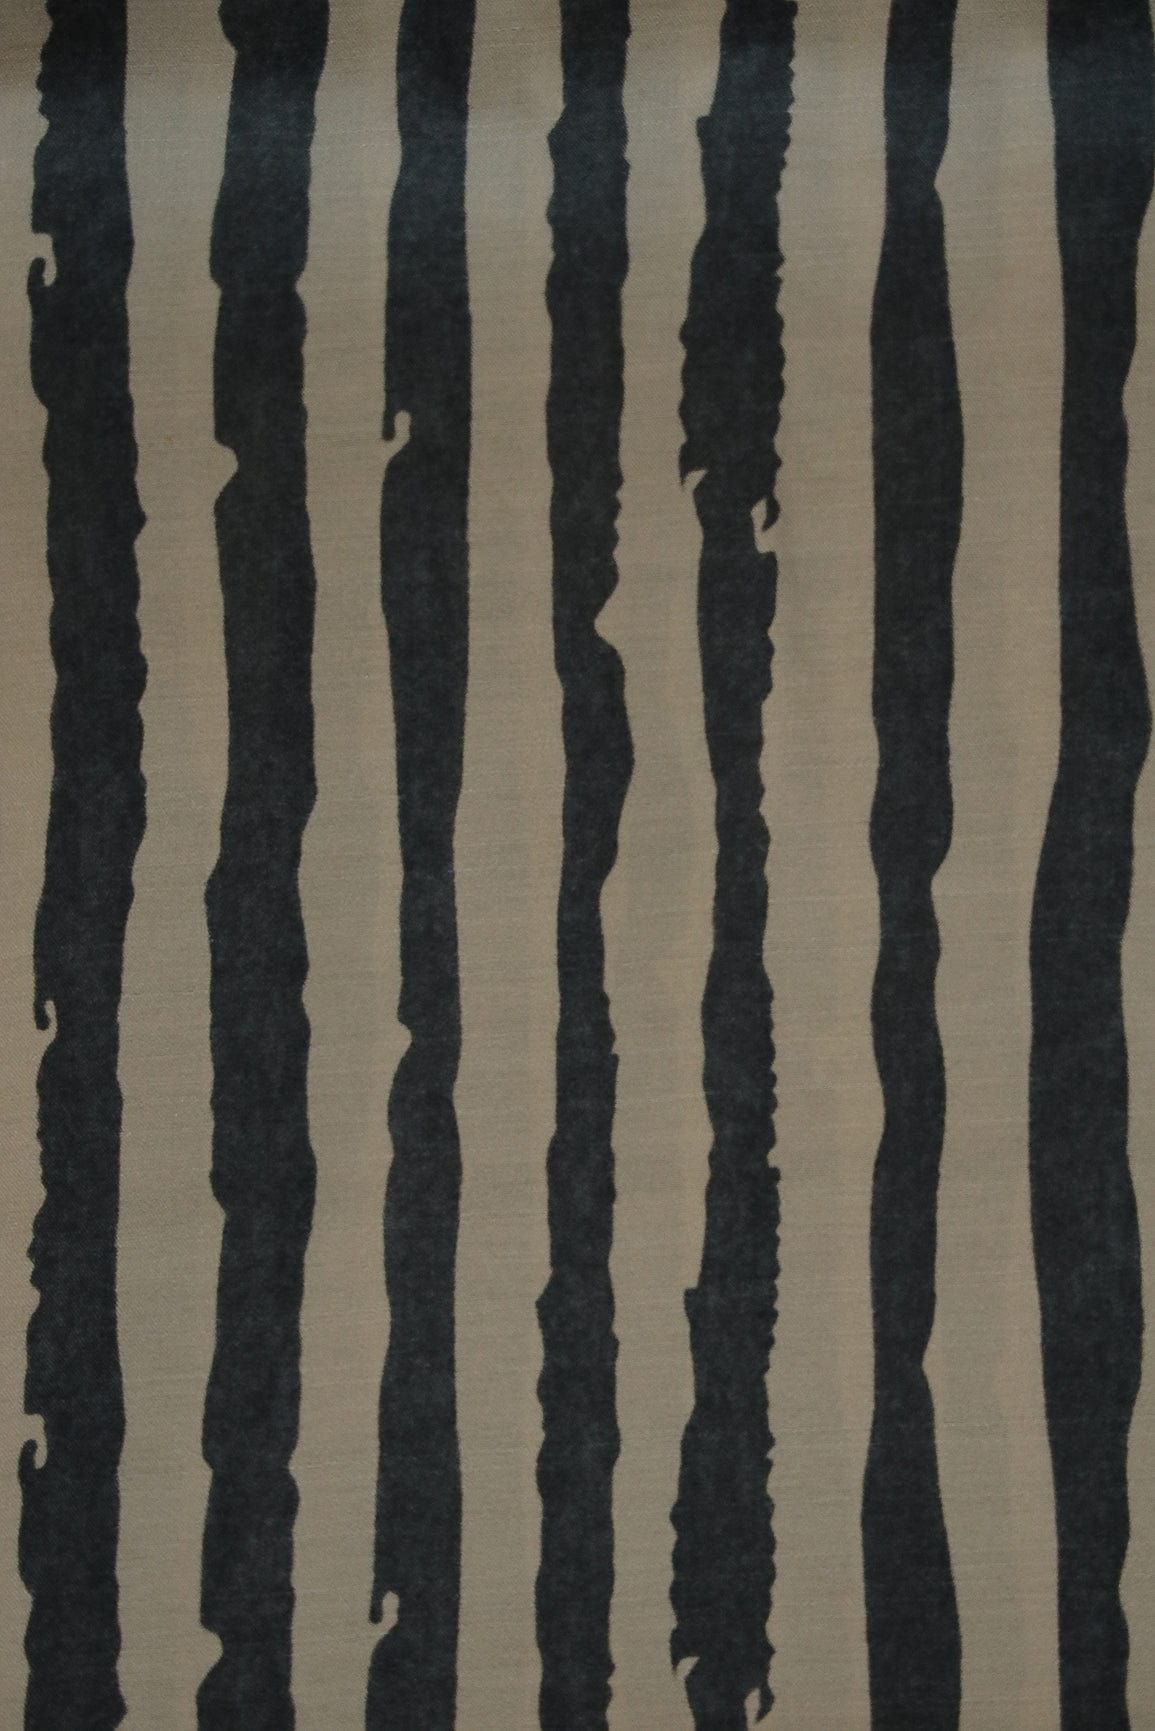 doeraa Prints Beige and Black Stripes Digital Print on Tussar Satin Fabric